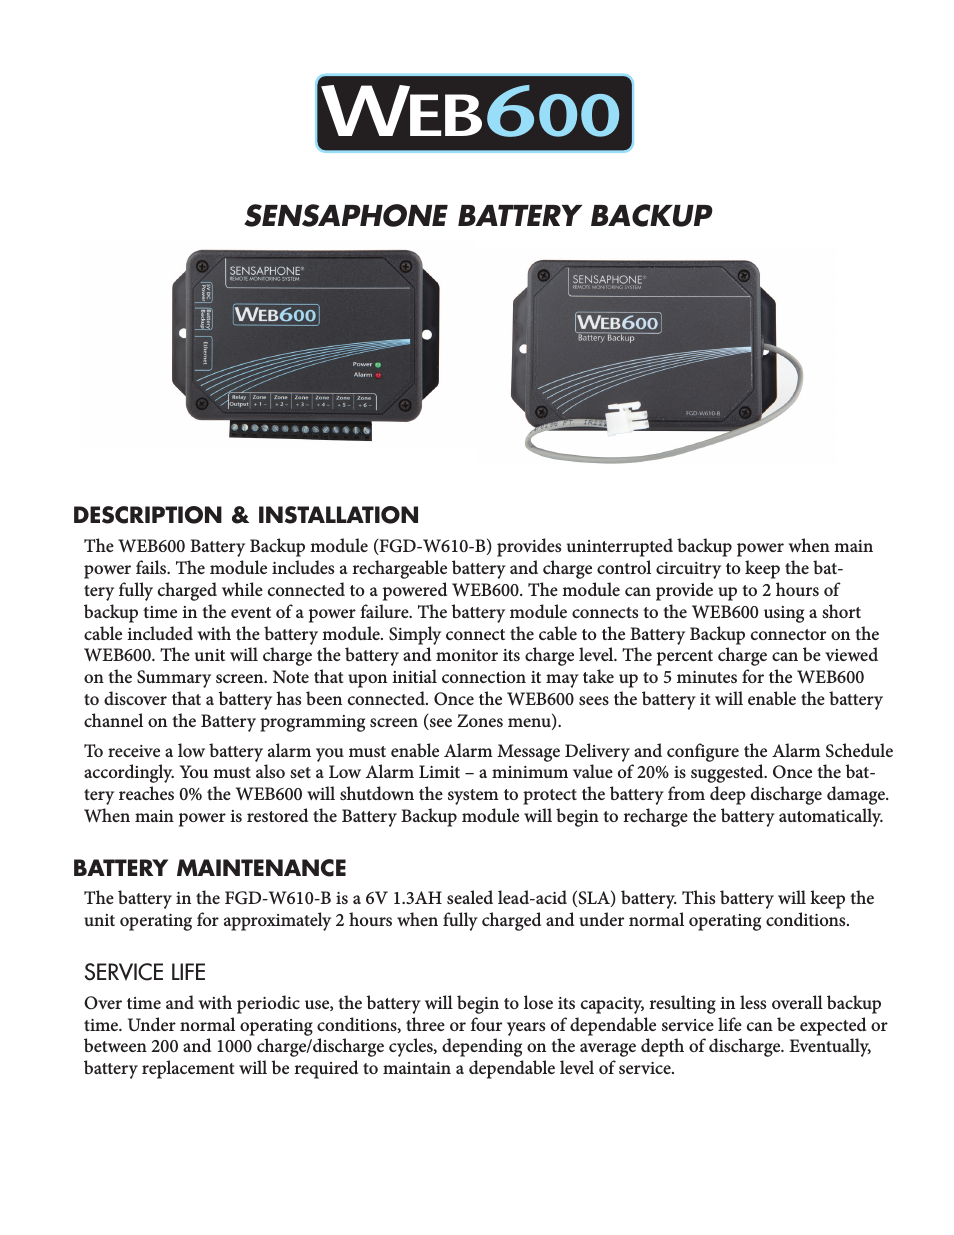 fgd-W610-B WEB600 Battery Backup